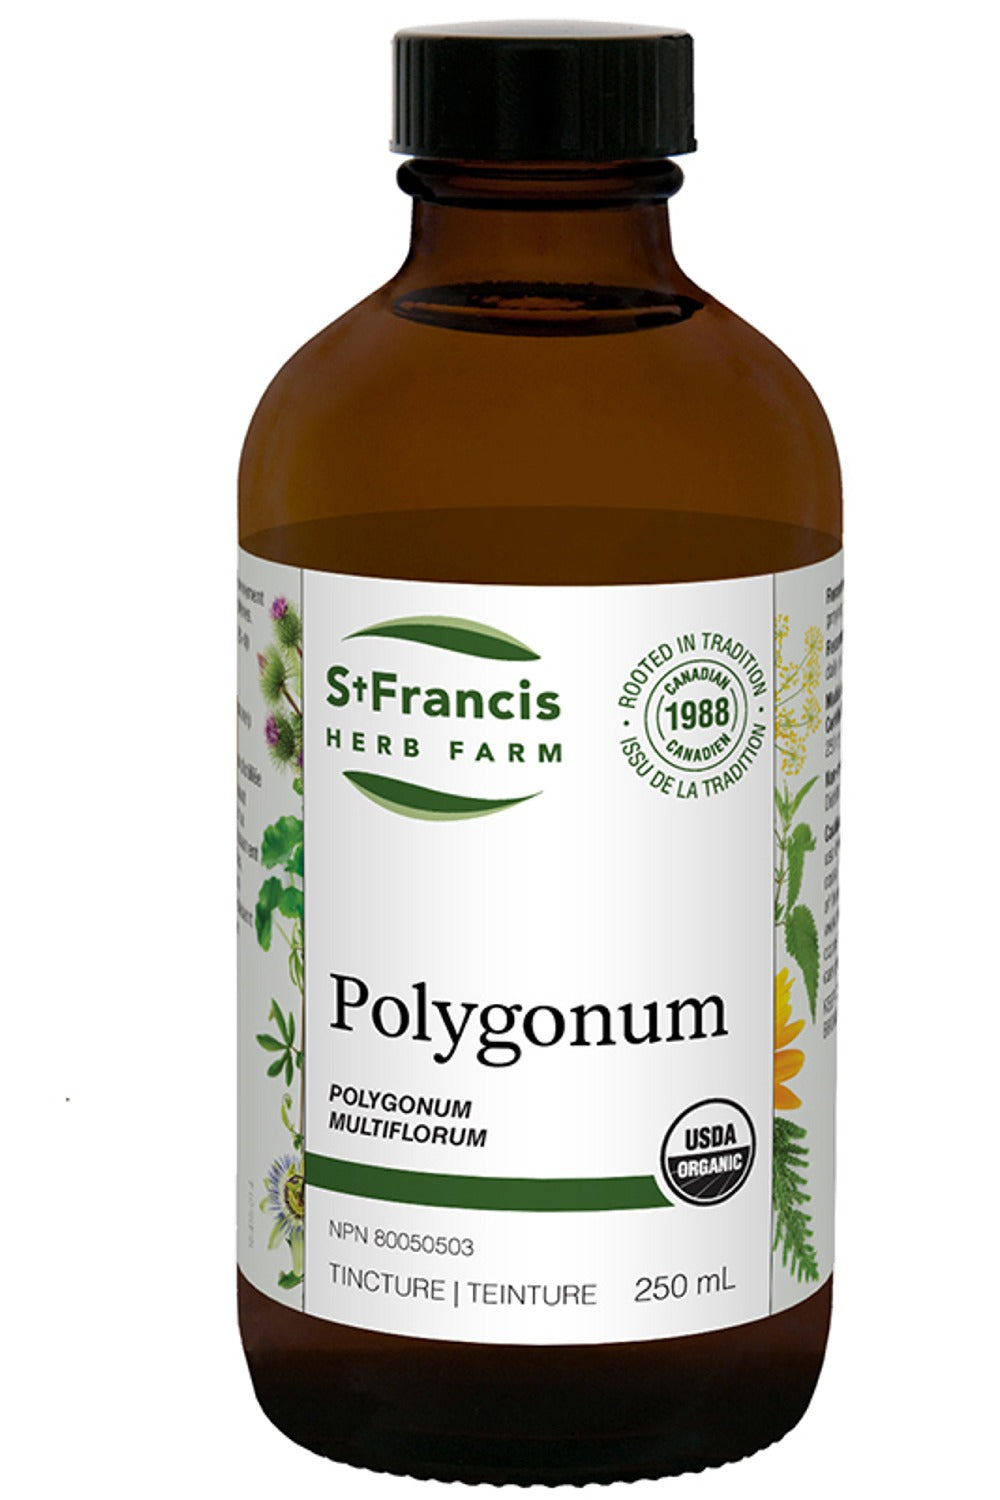 ST FRANCIS HERB FARM Polygonum (250 ml)